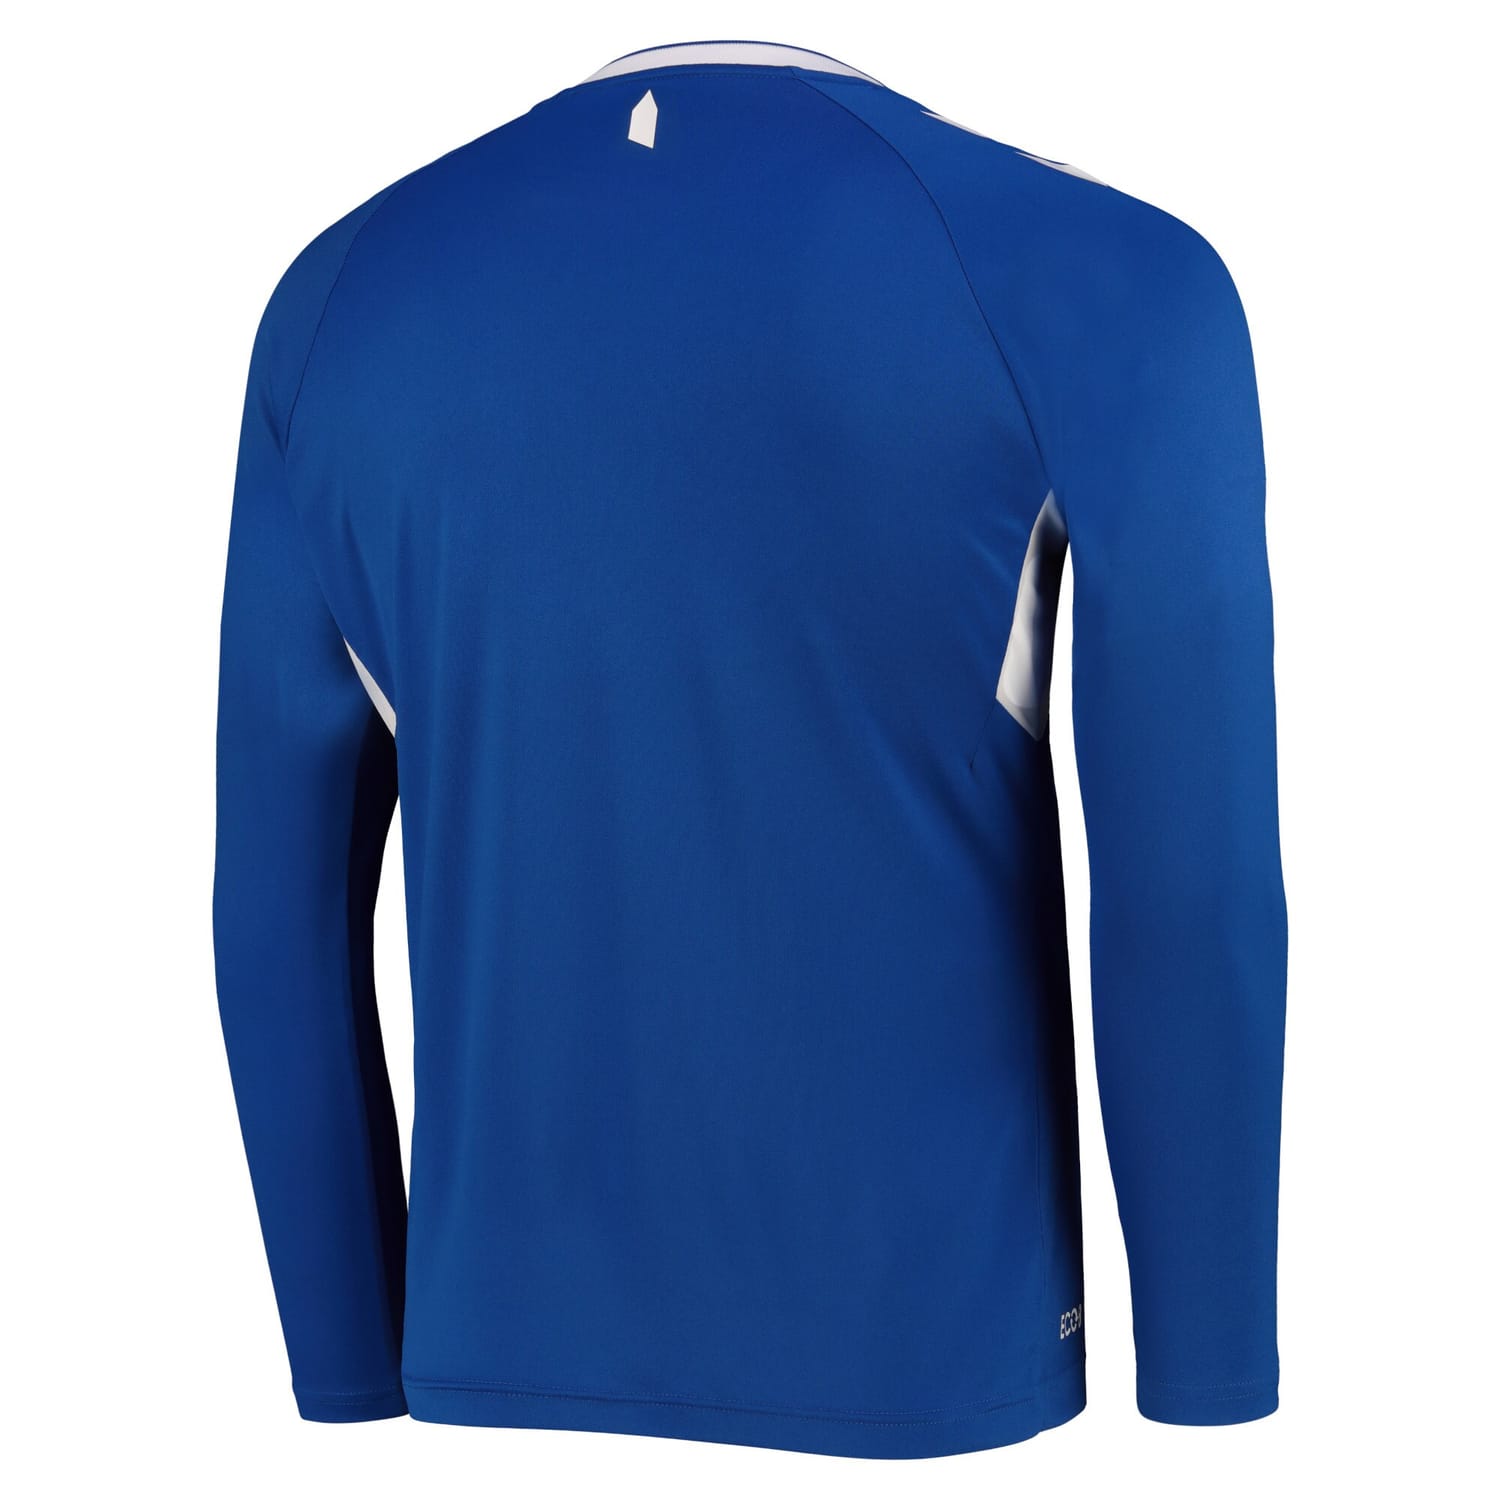 Premier League Everton Home Jersey Shirt Long Sleeve Blue 2022-23 for Men